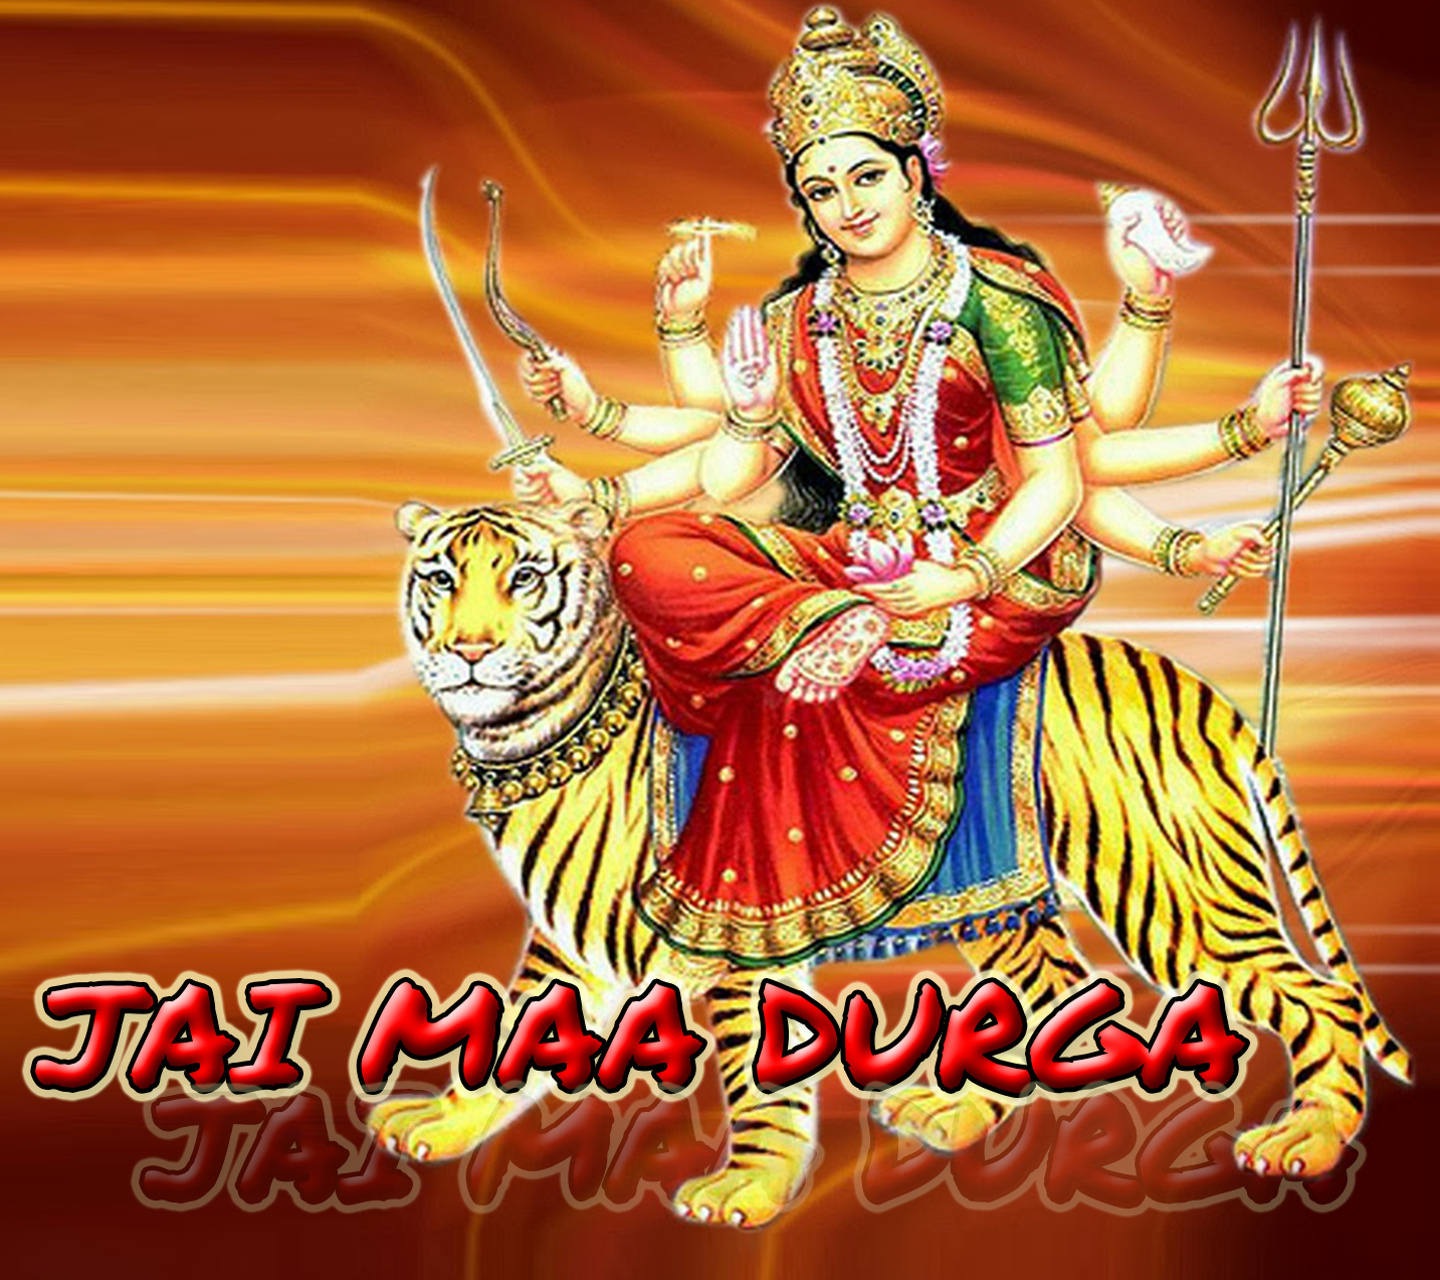 Jai Durga Band Profile Pic